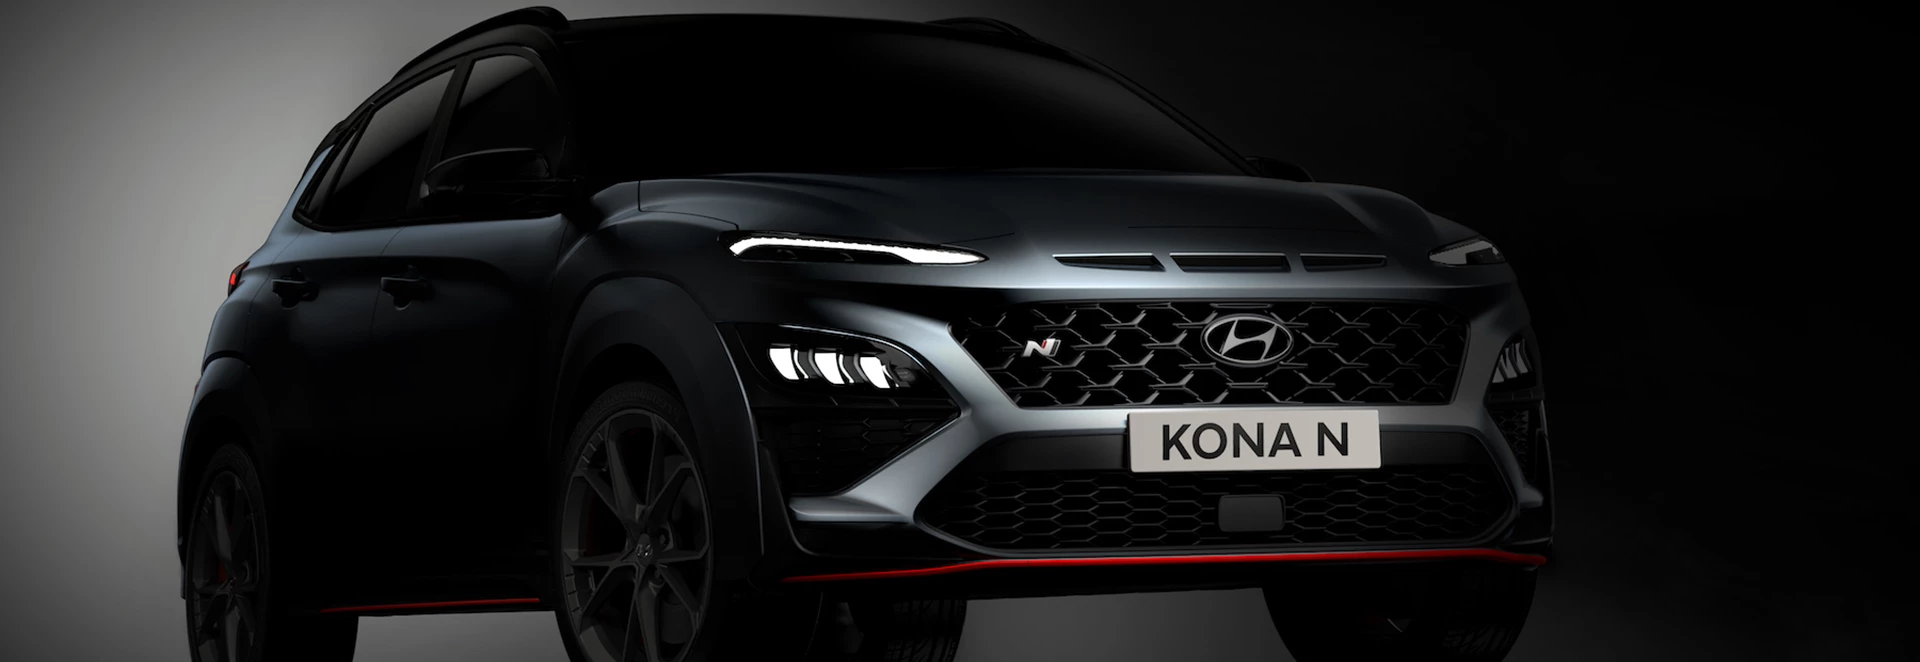 Hyundai teases hot new Kona N crossover 